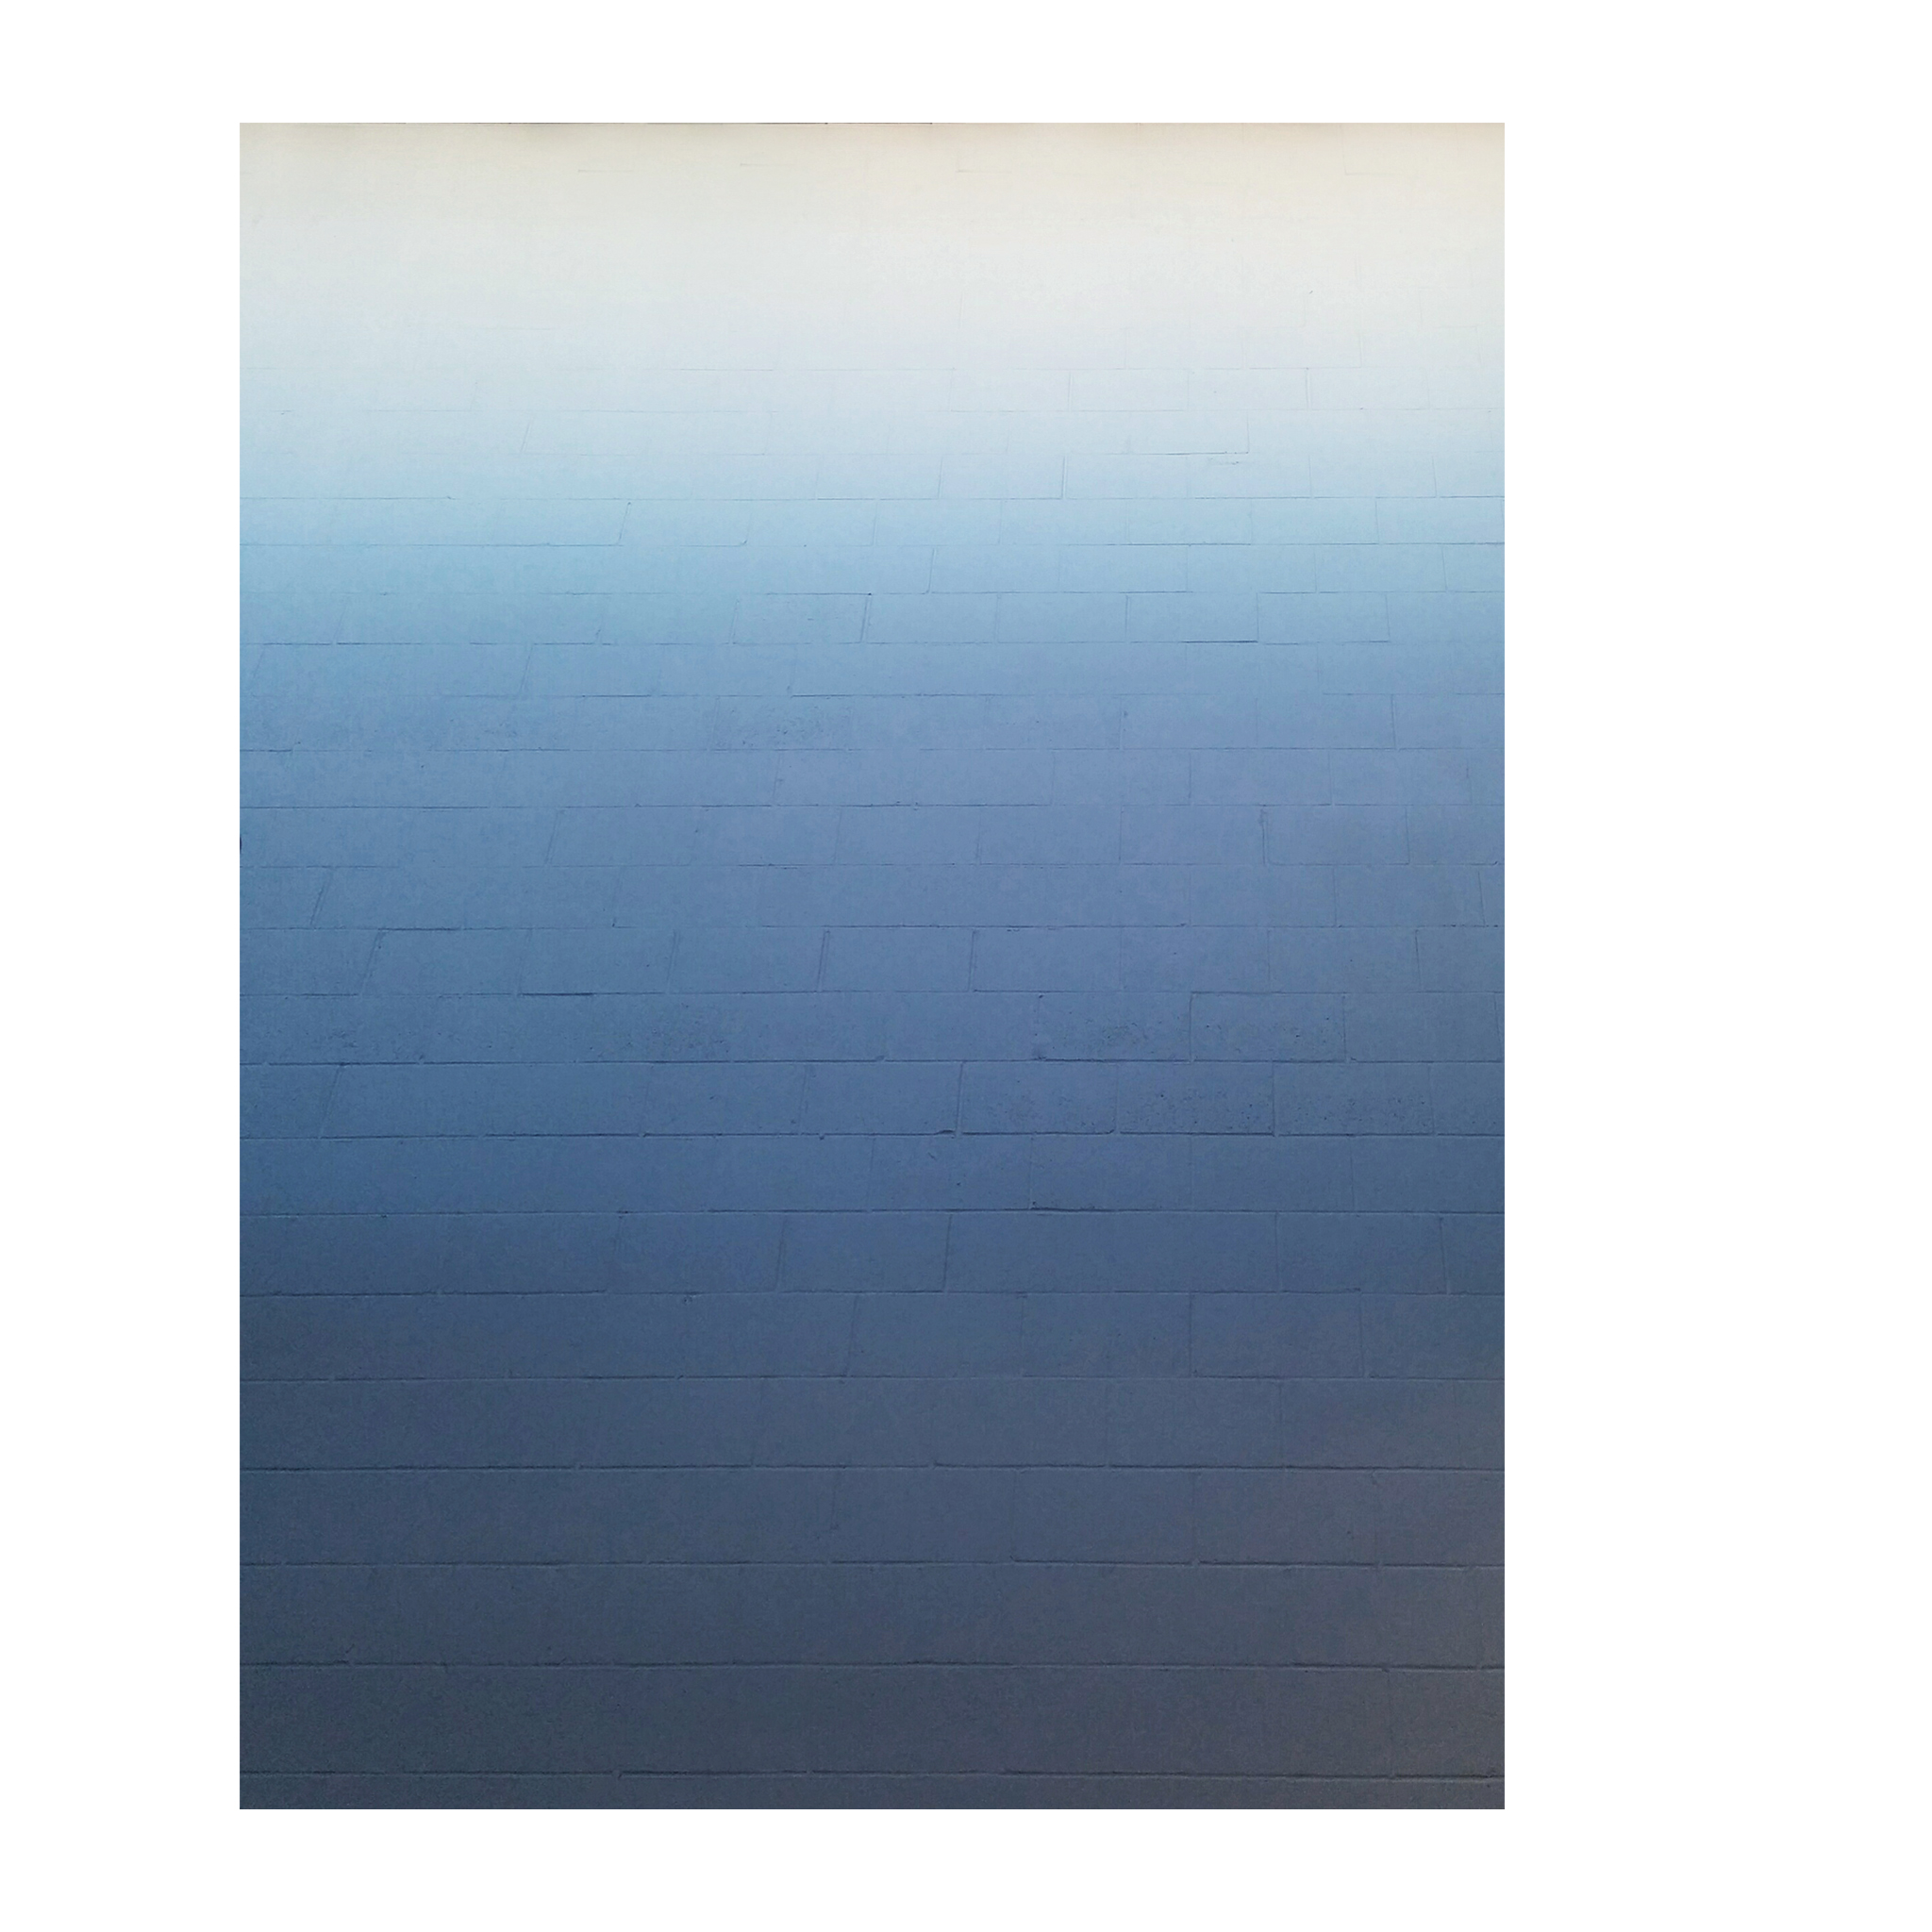 dark blue to white gradient on a brick wall